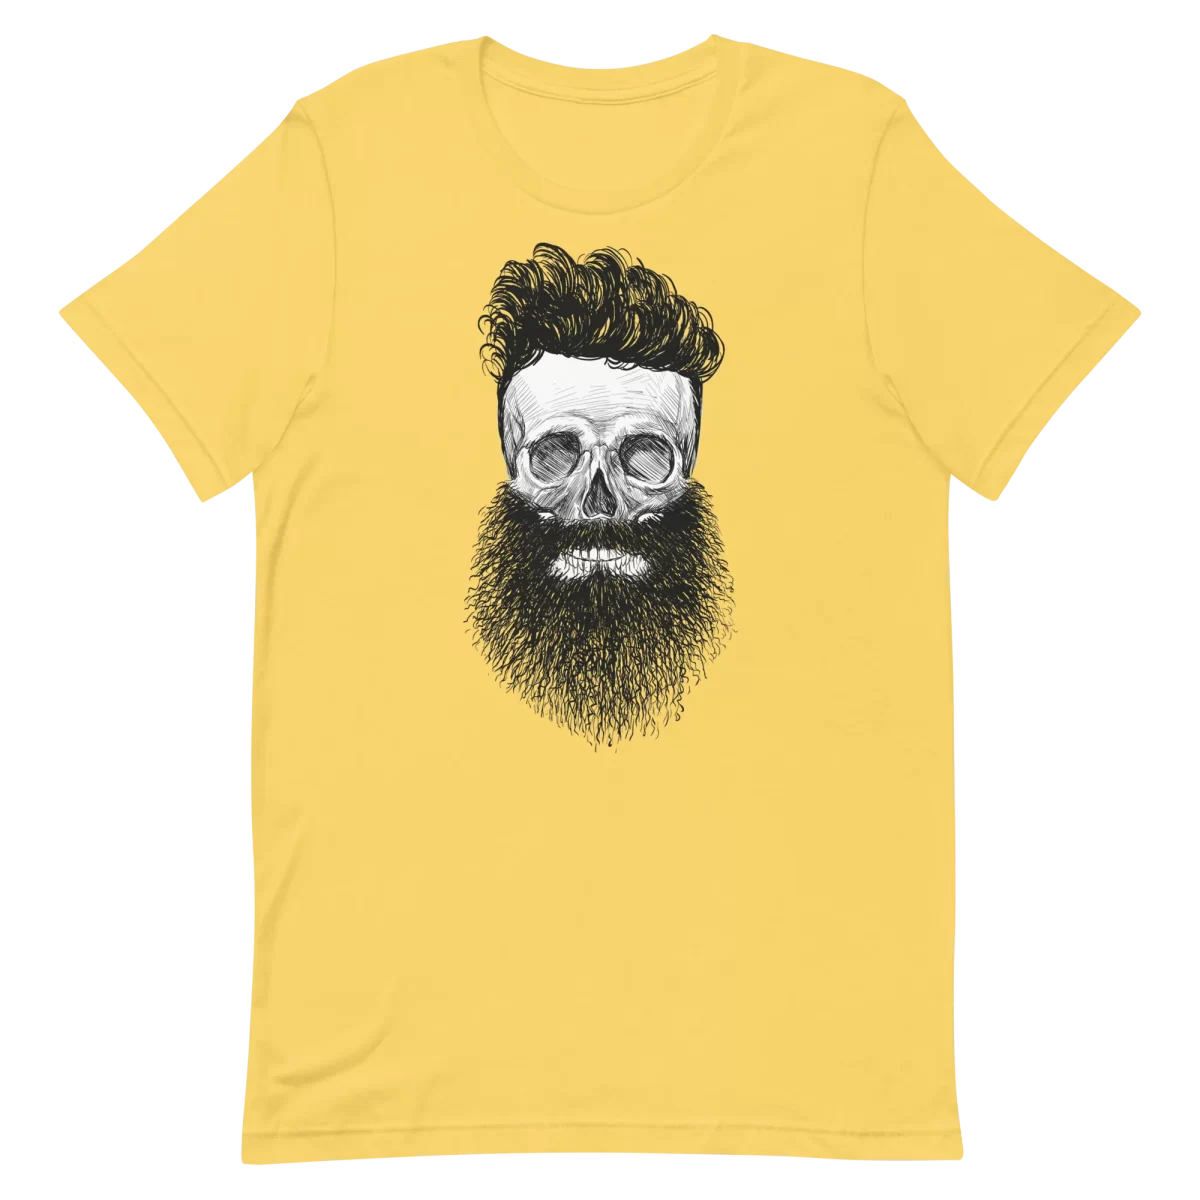 Unisex T-Shirt - Skull Beard - Yellow